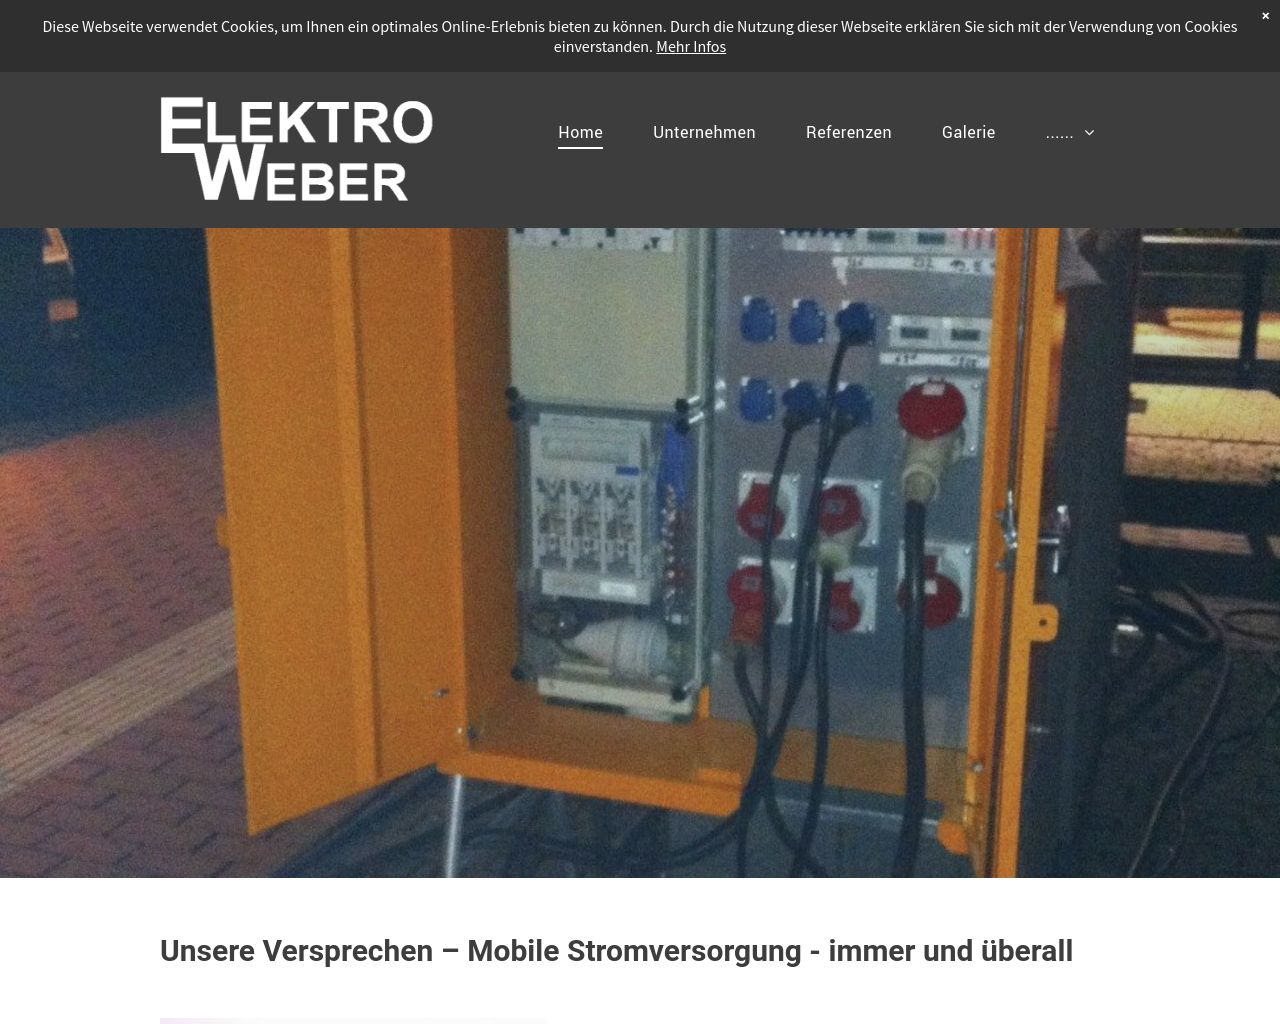 Bild Website elektroweber.eu in 1280x1024